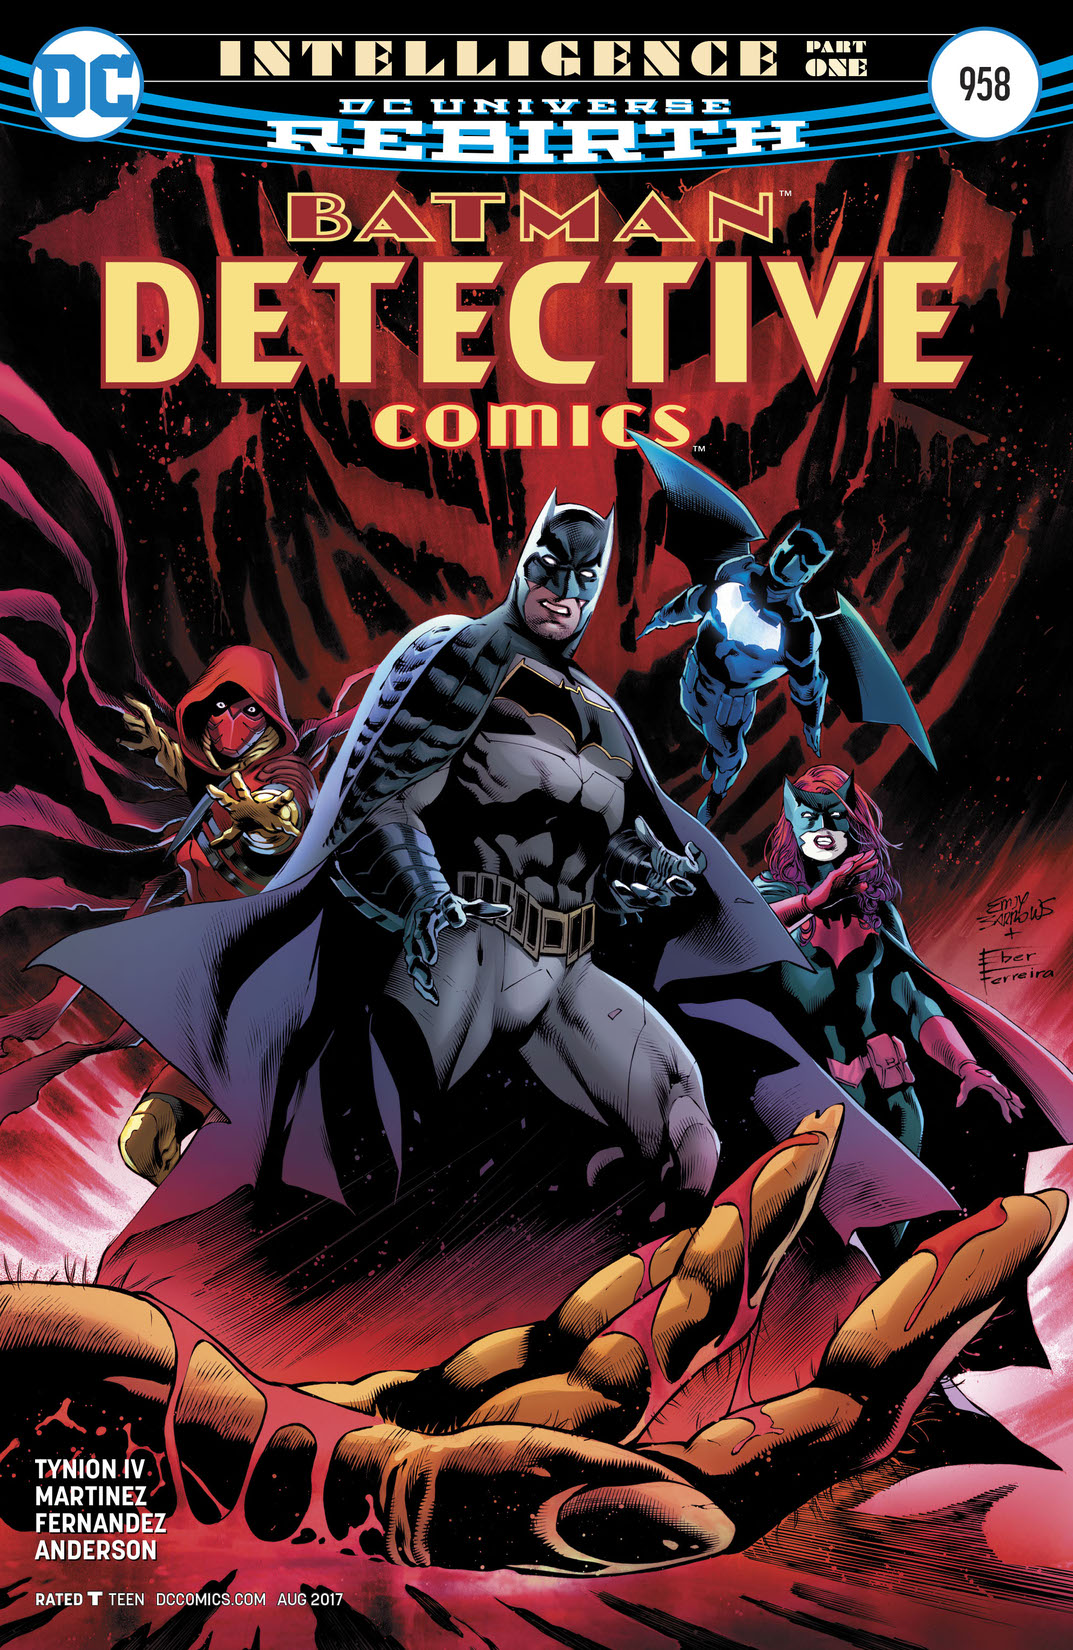 Detective Comics (2016-) #958 preview images